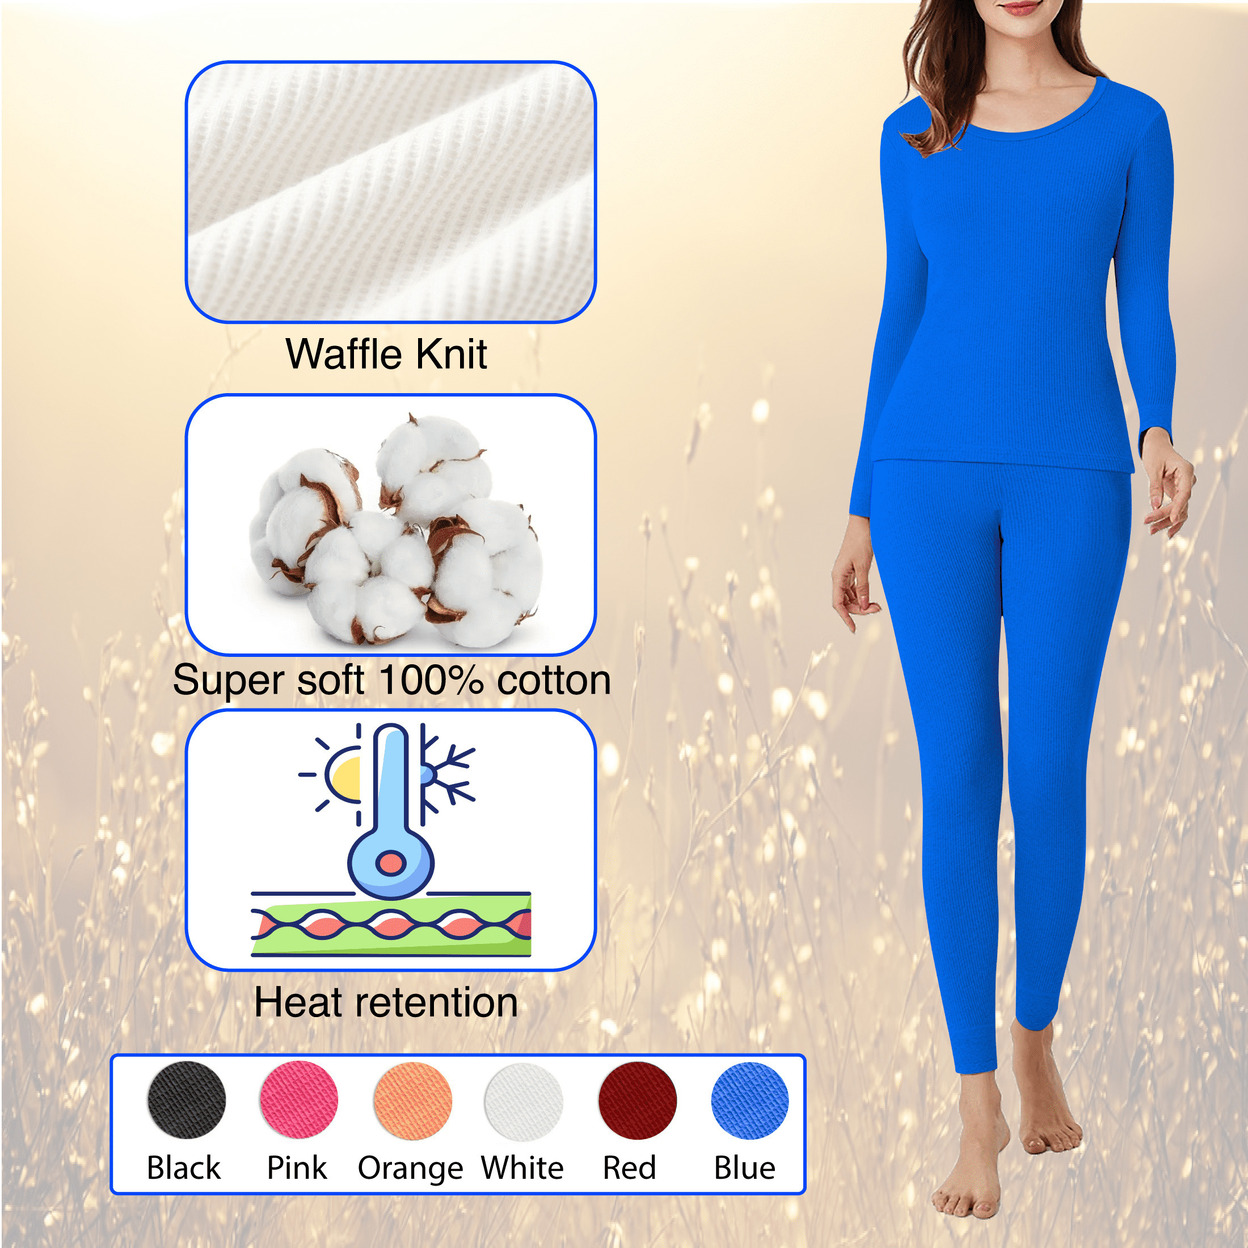 2-Piece: Women's Ultra Soft Cotton Waffle Knit Thermal Sets - White, Medium